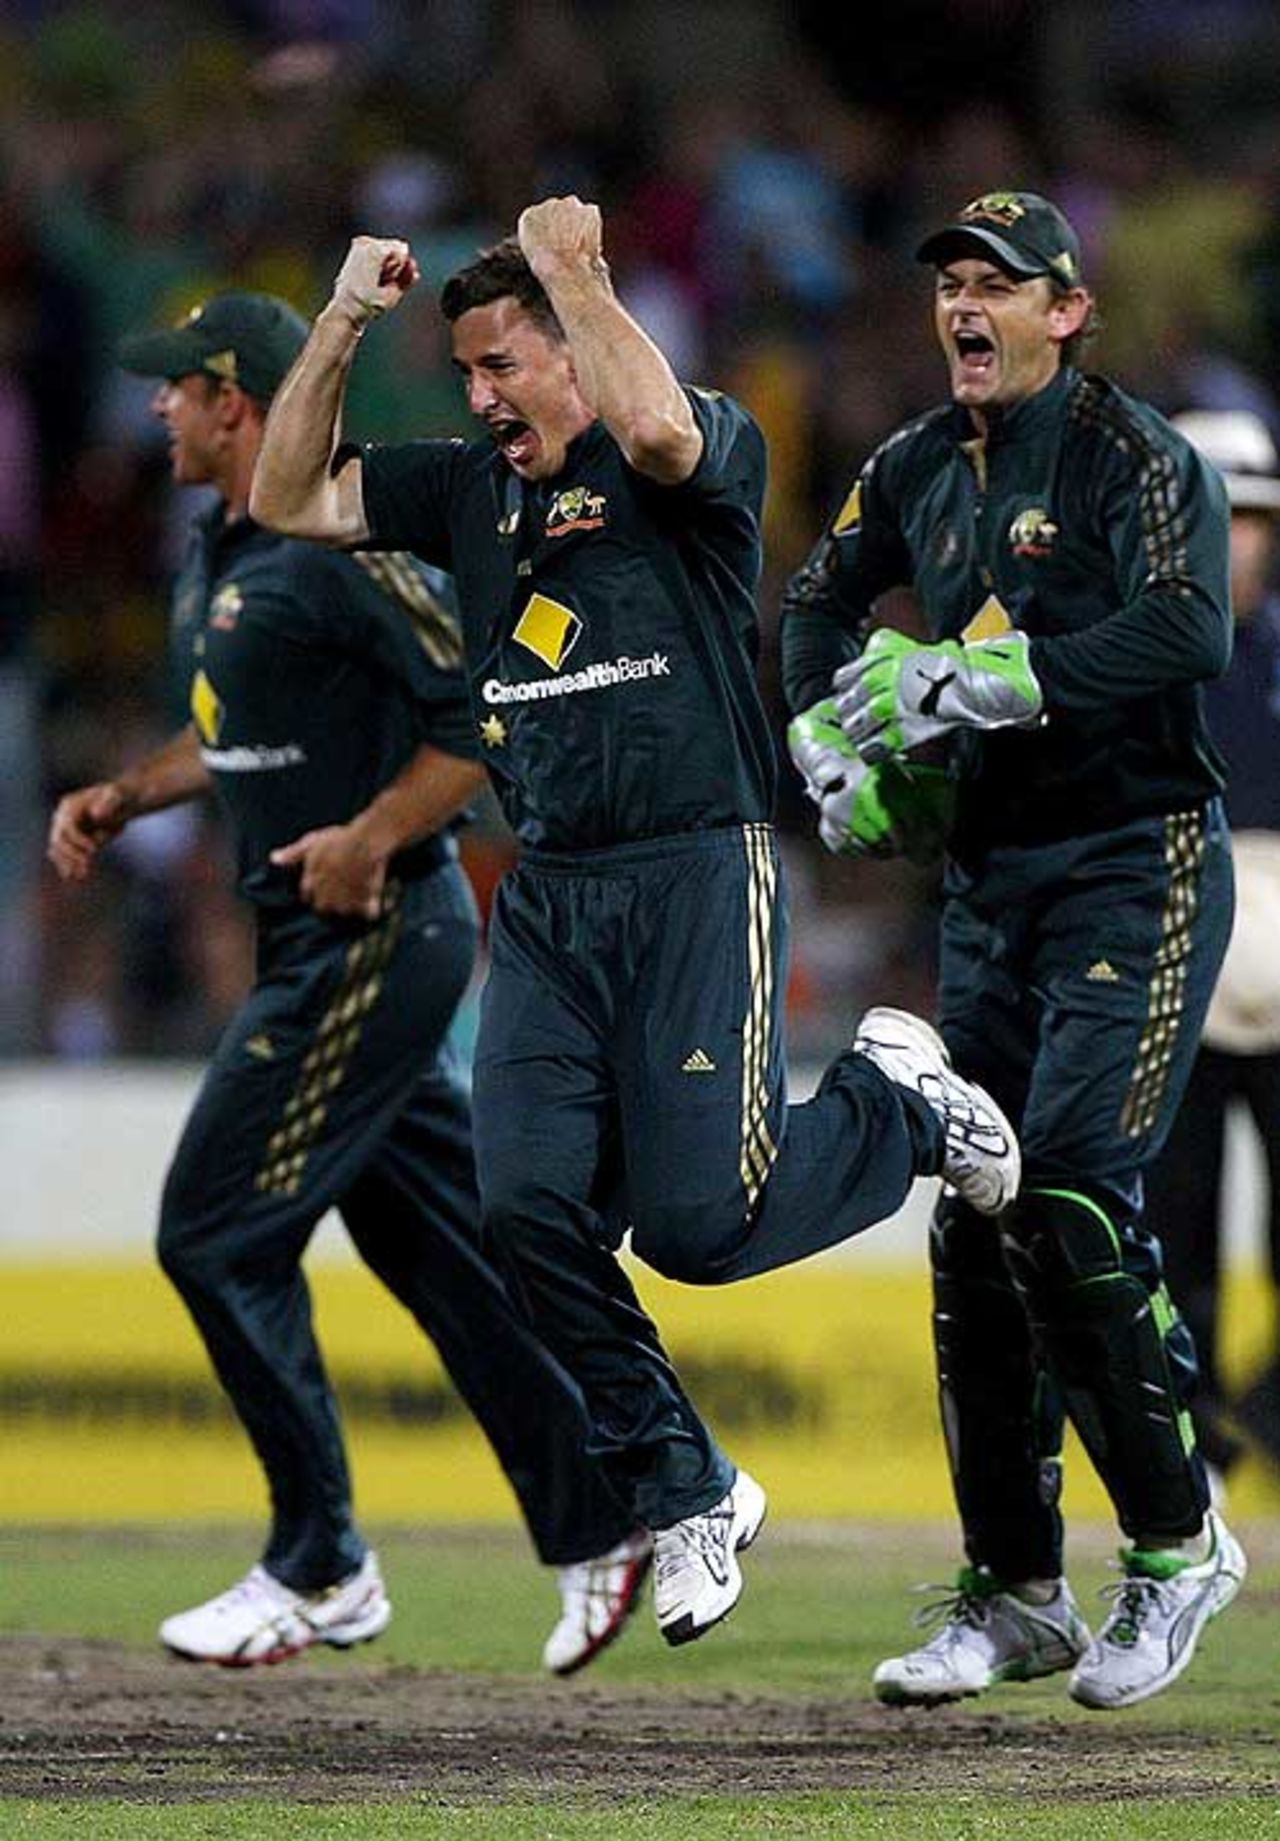 Brad Hogg cannot conceal his pleasure at bowling Yuvraj Singh, Australia v India, CB Series, 1st final, Sydney, March 2, 2008